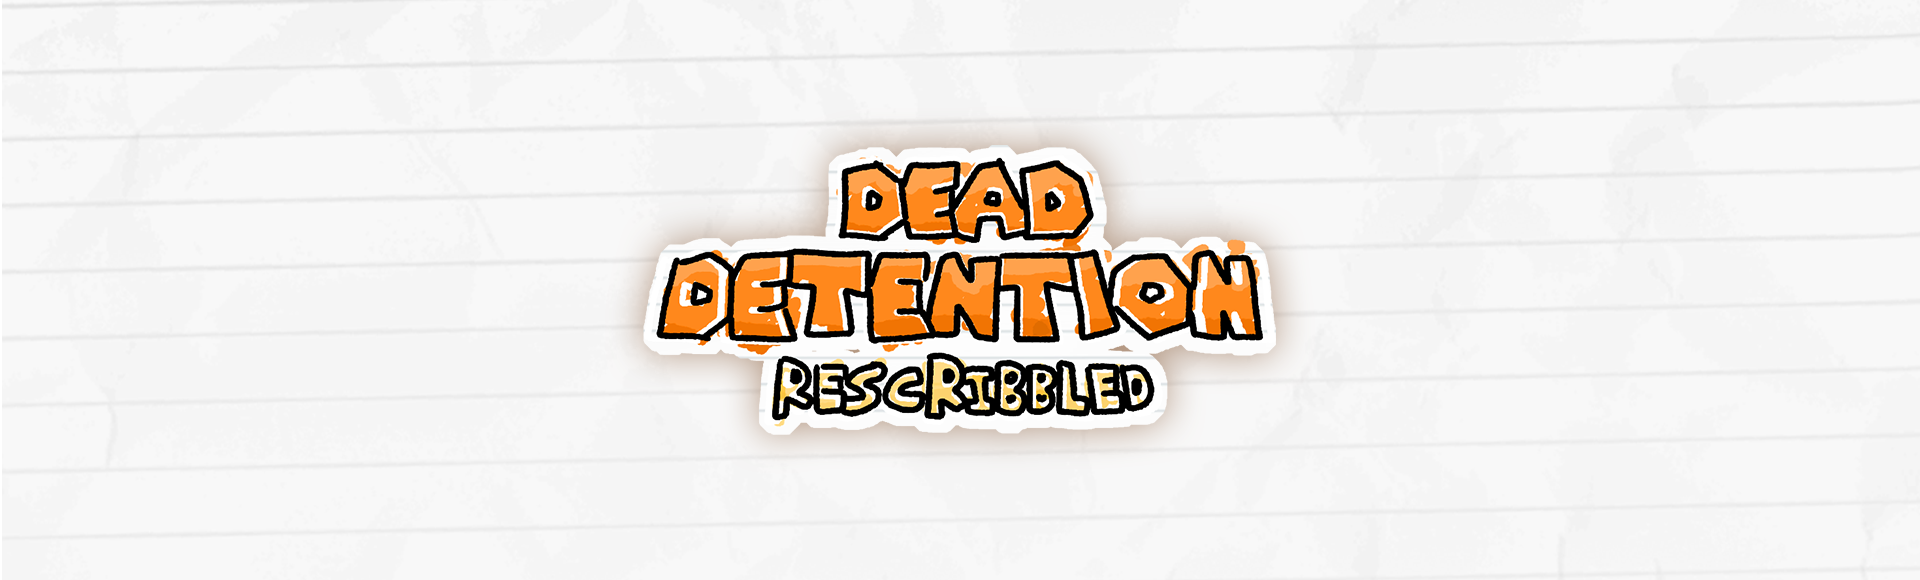 DEAD DETENTION (Rescribbled)